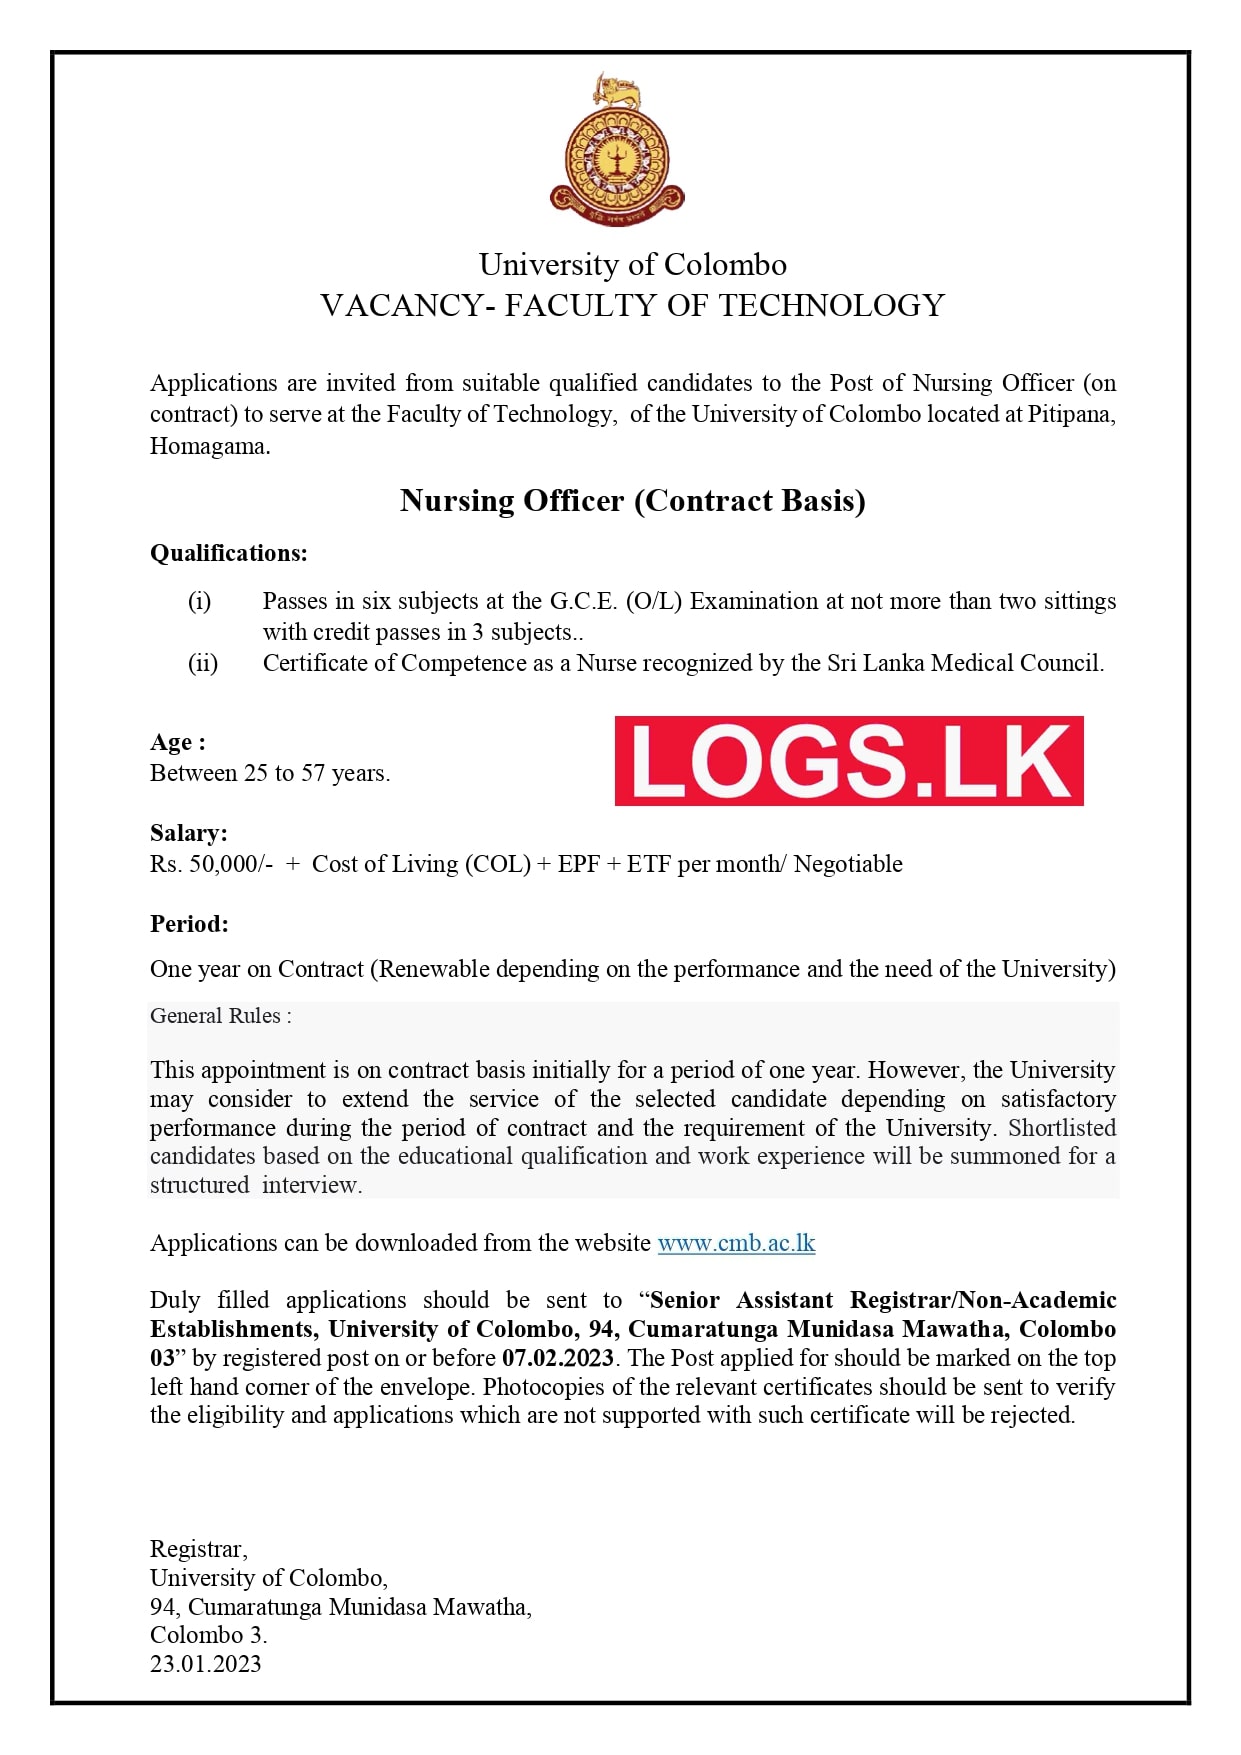 Nursing Officer - University of Colombo Vacancies 2023 Application Form, Details Download